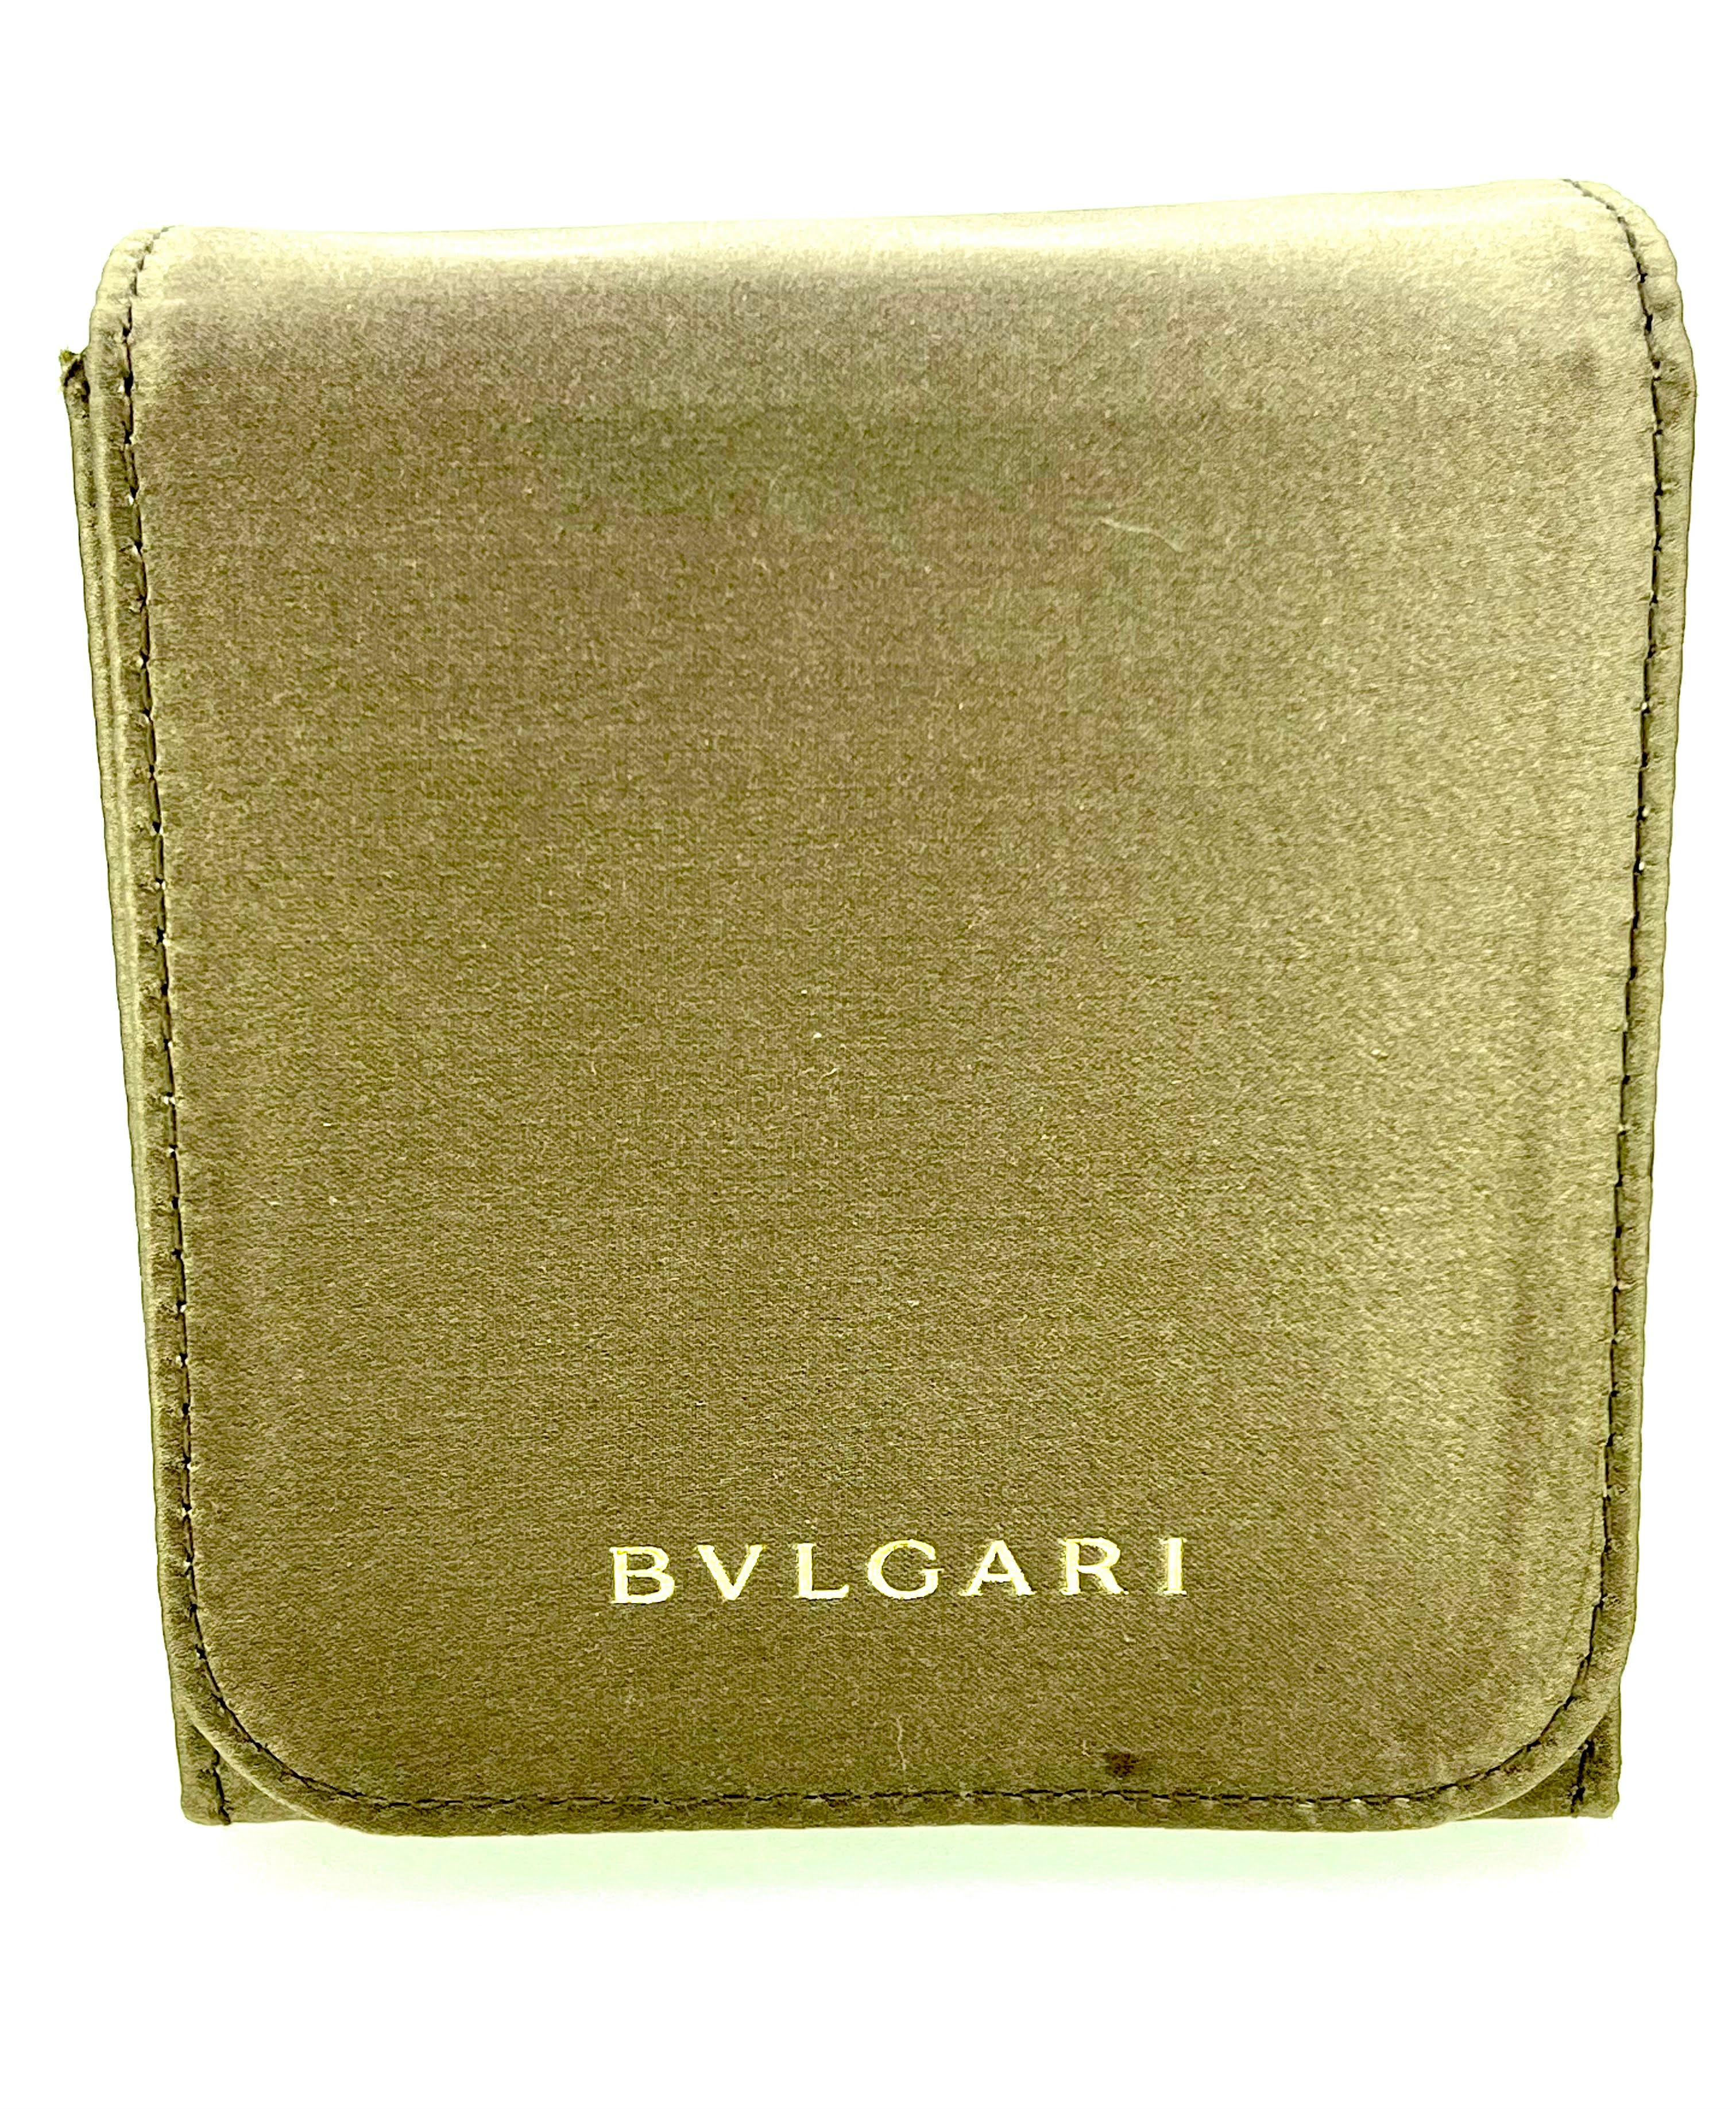 Bulgari 18k Yellow Gold Tubogas Watch with Black Dial 1